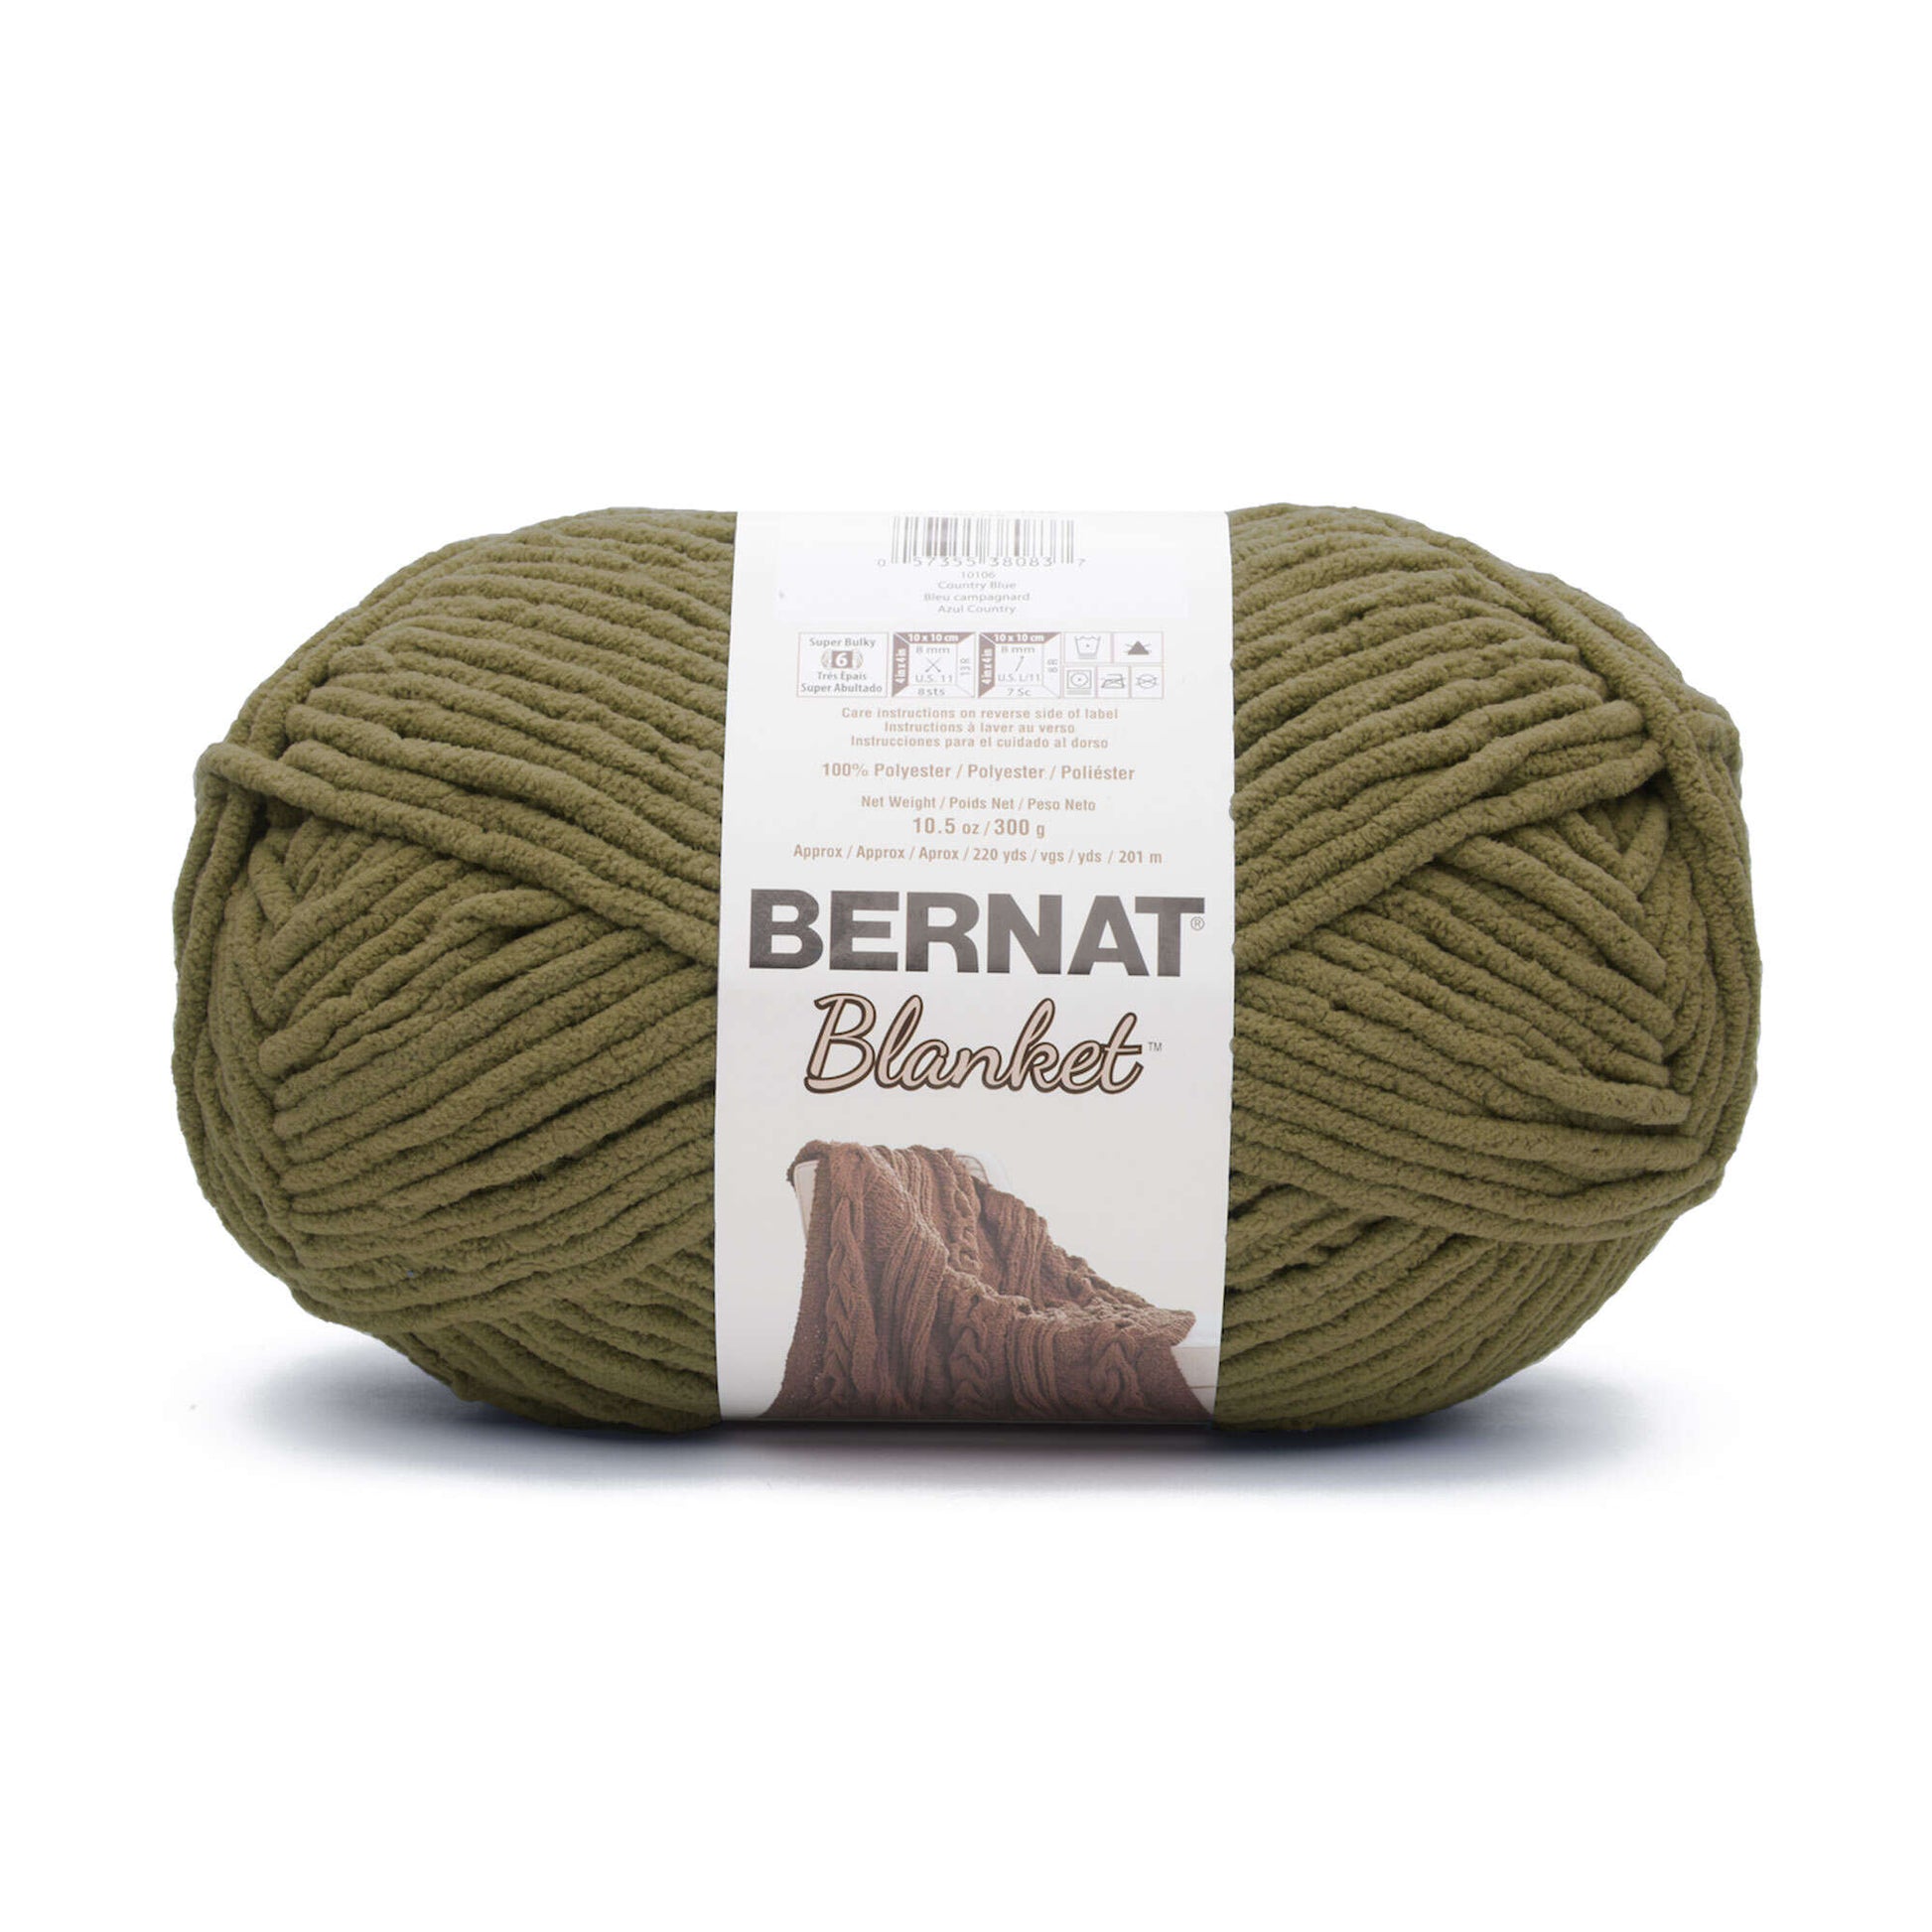 Bernat Blanket Big Ball Yarn-Moss-Coastal Collection, 1 count